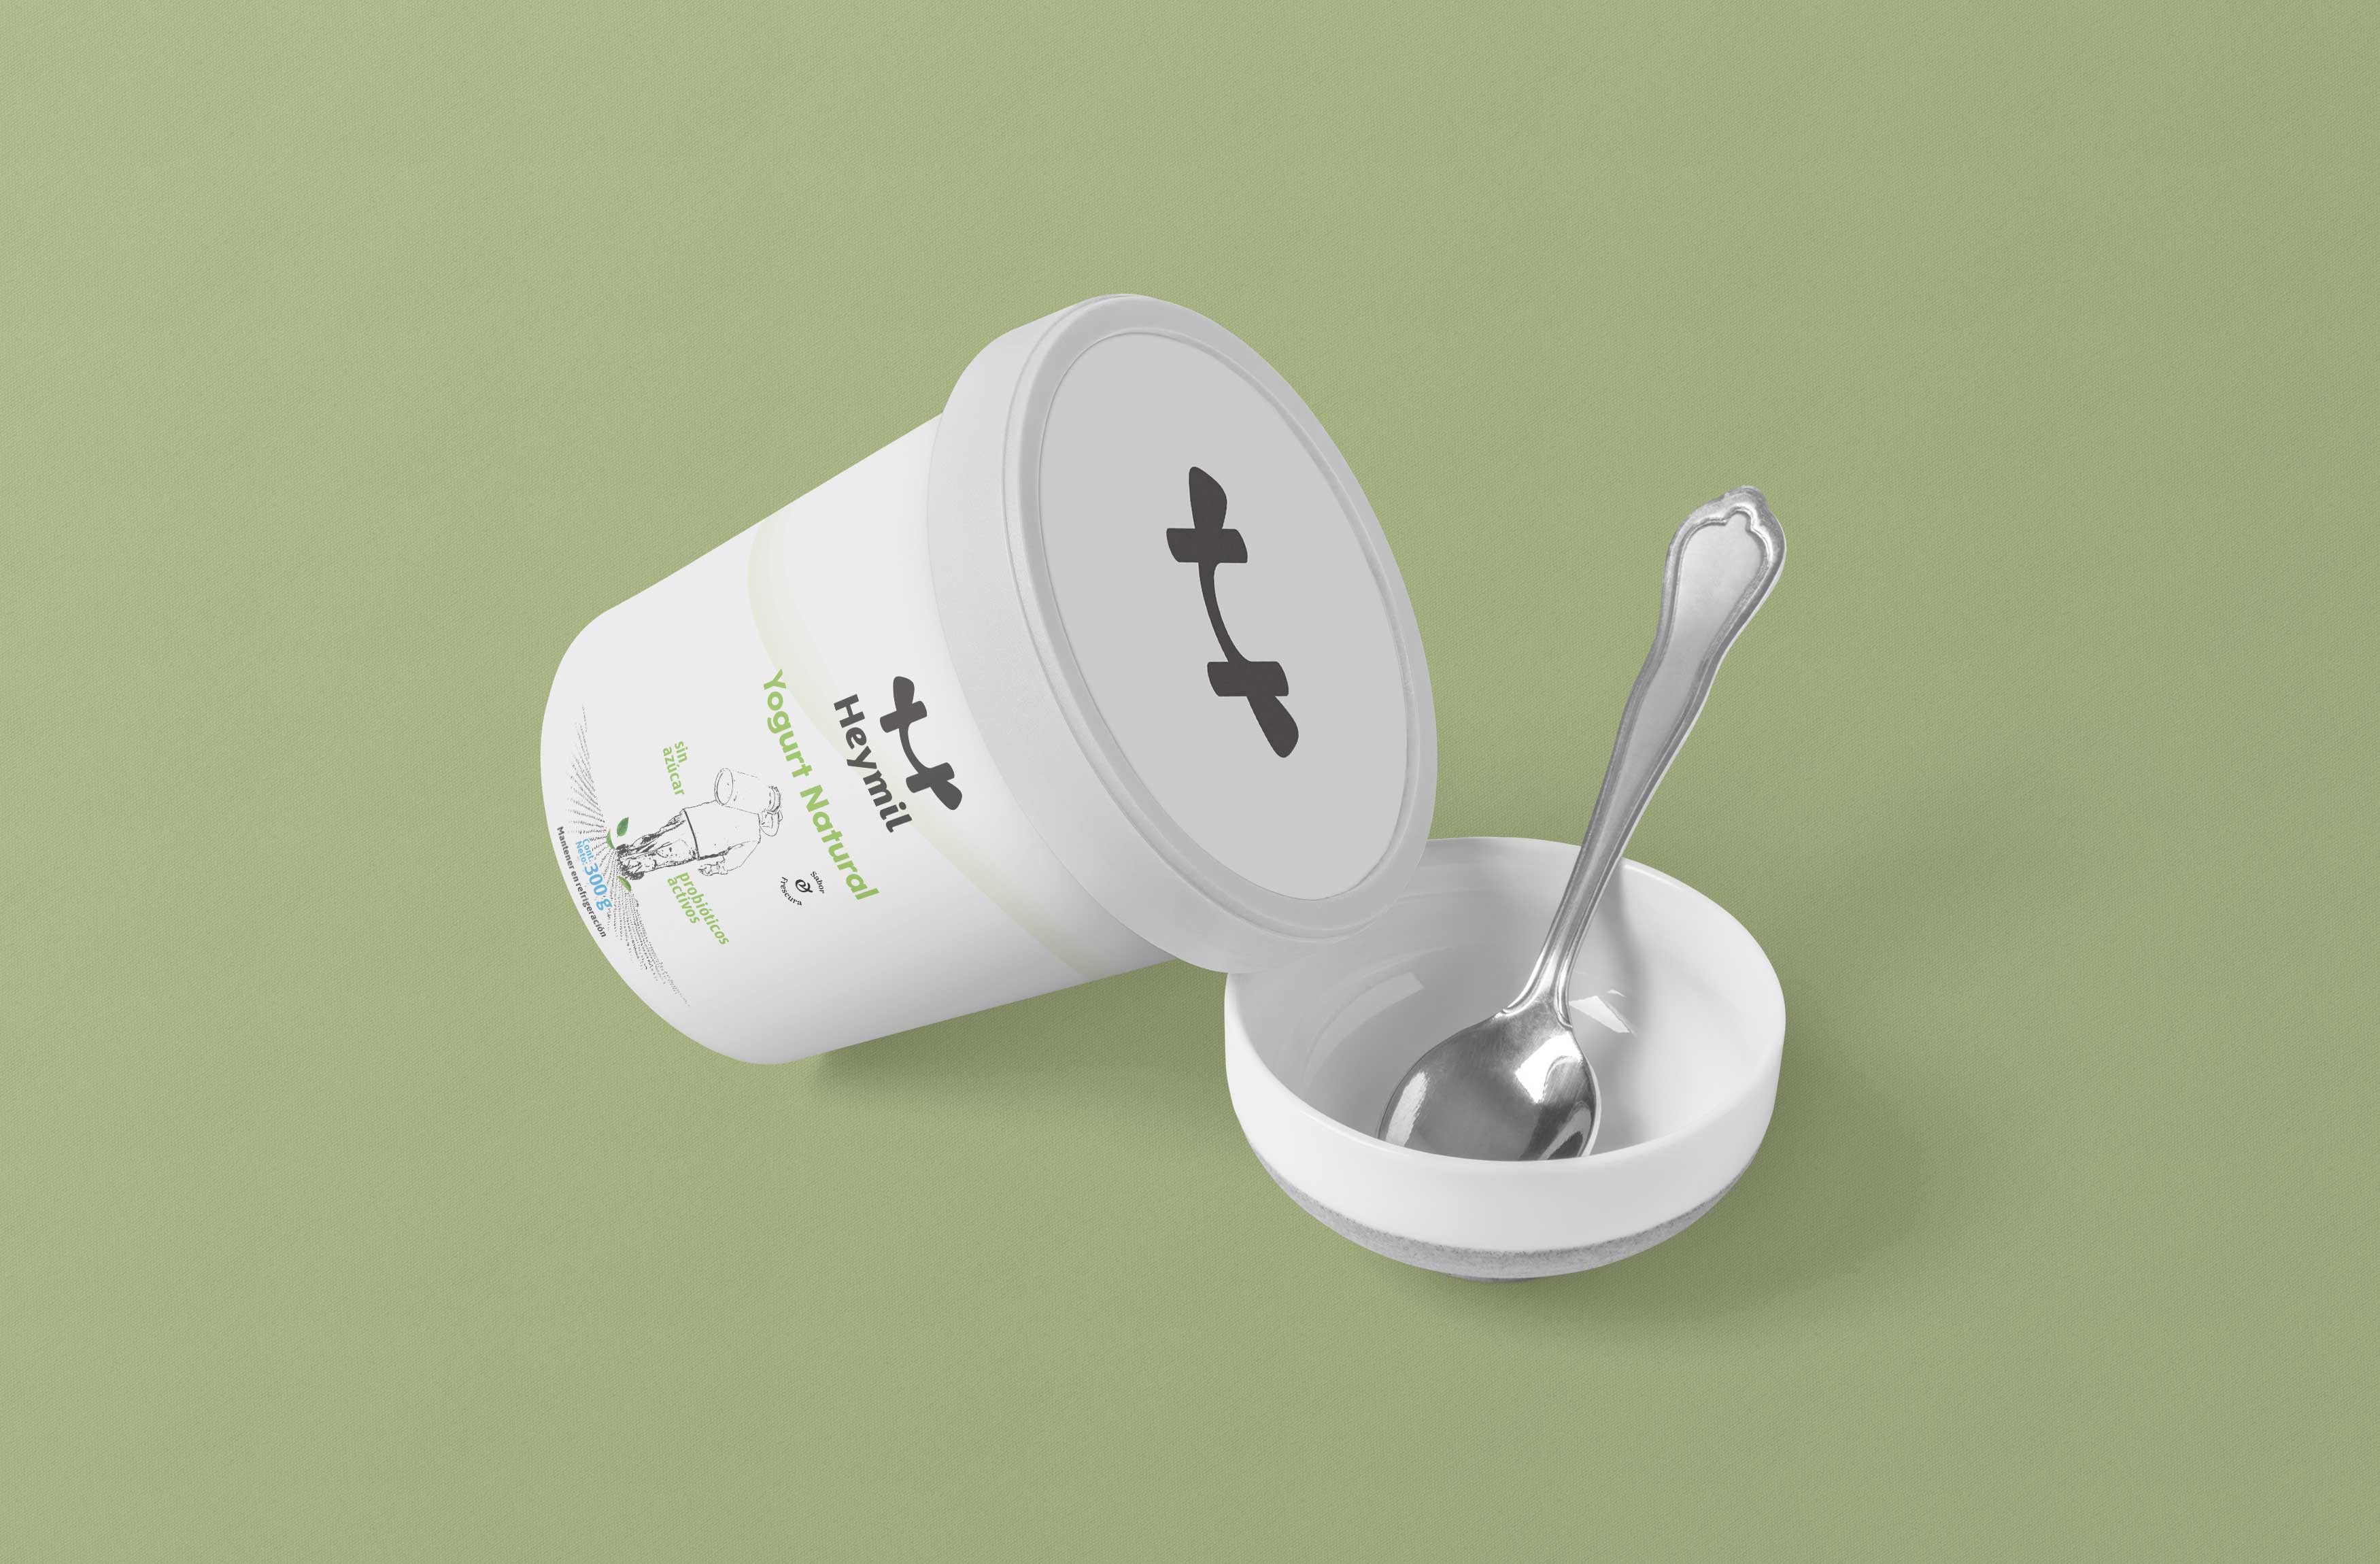 Diseño de etiquetas - Yogurt Natural - Packaging - Soluciones de Firstrein